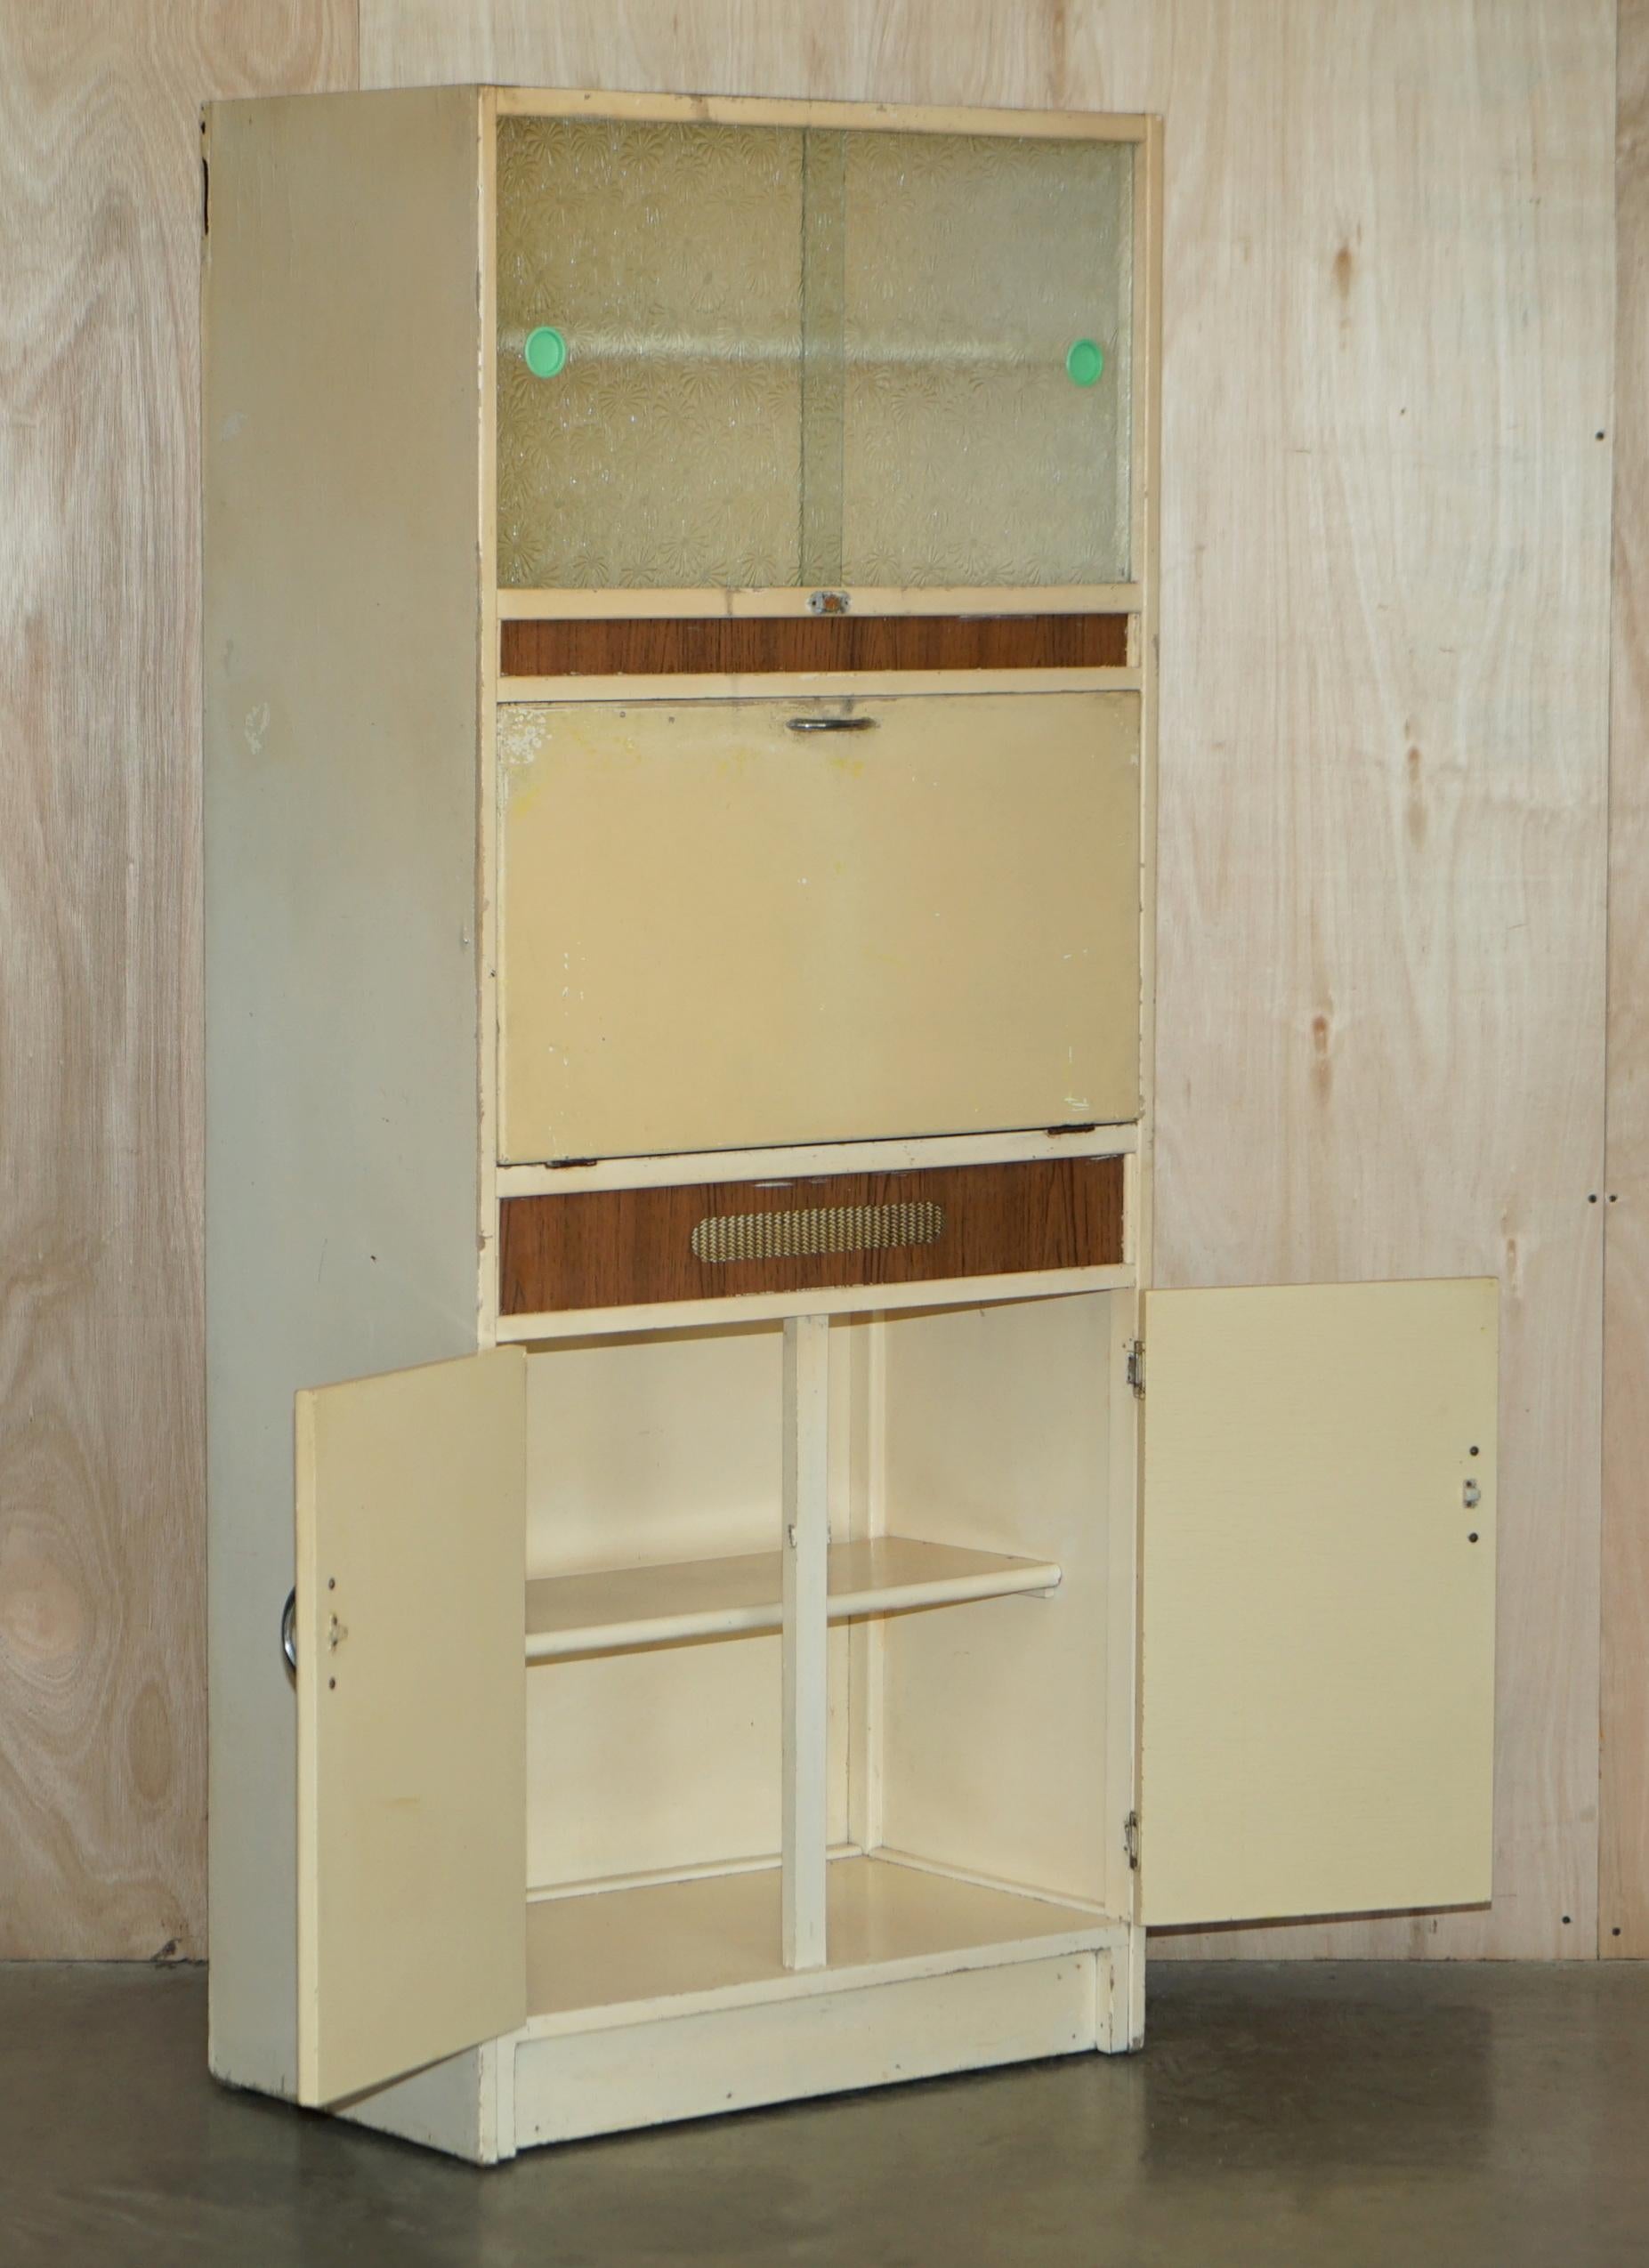 Cool Retro Original 1950's English Kitchen Habberdashery Larda Cupboard Cabinet For Sale 9